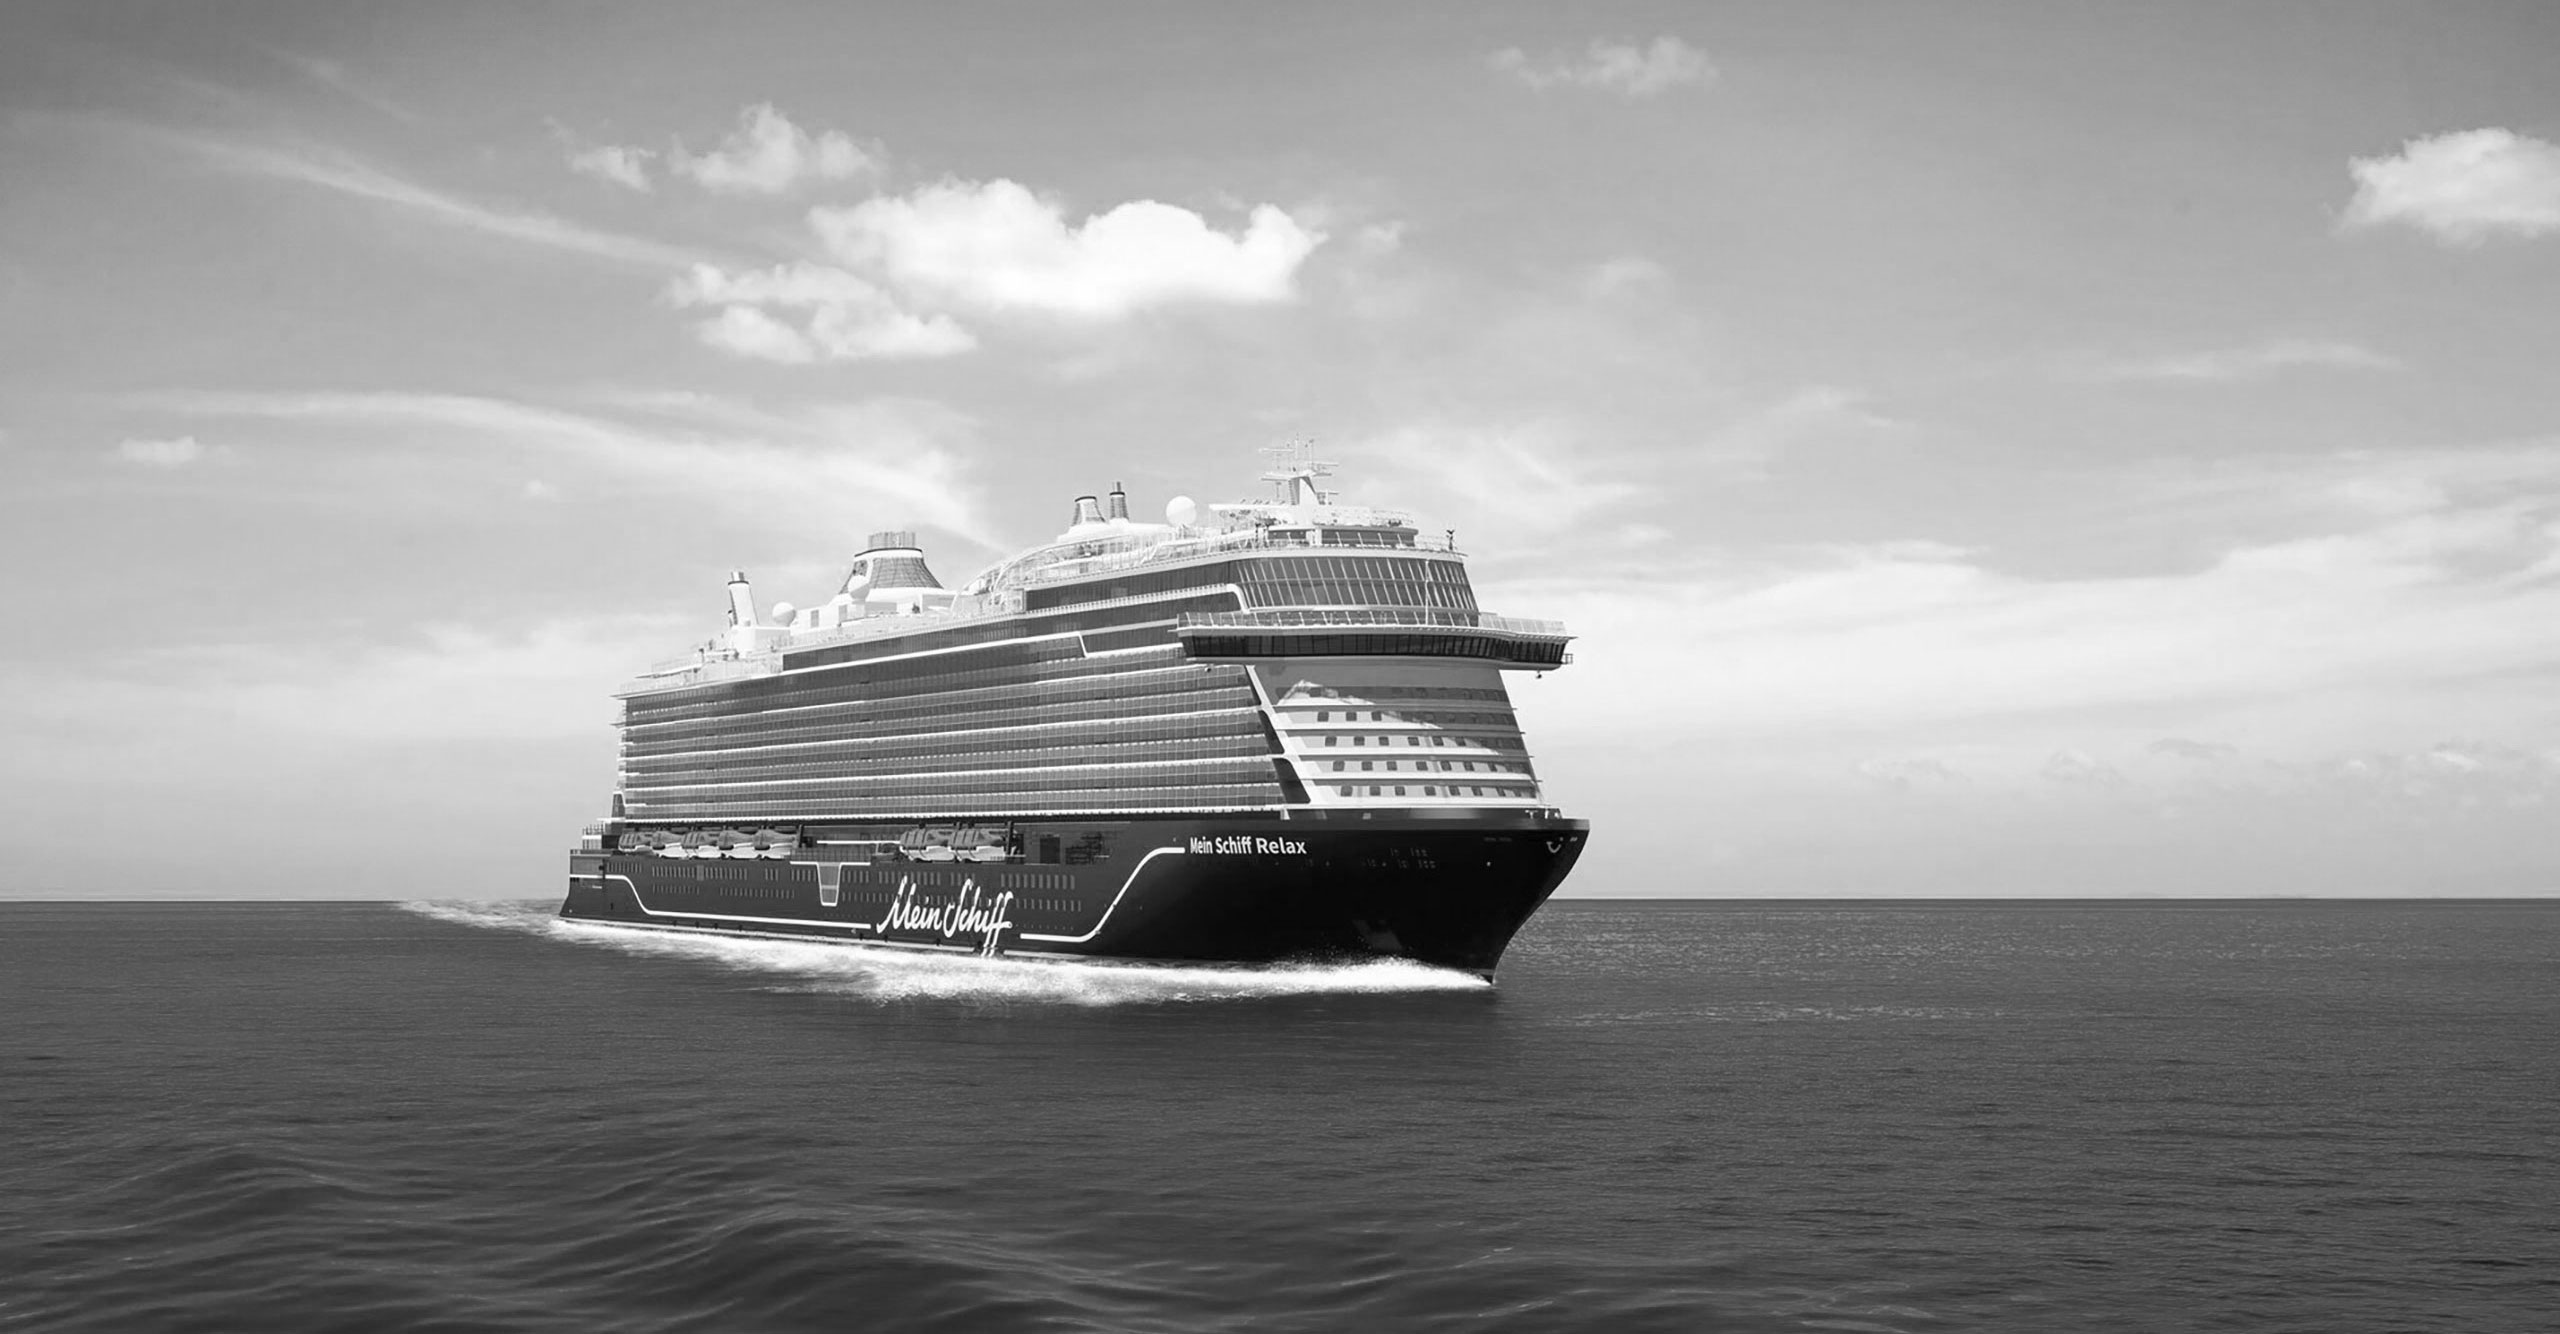 GEM Design for Cruise Ships - Mein Schiff Relax